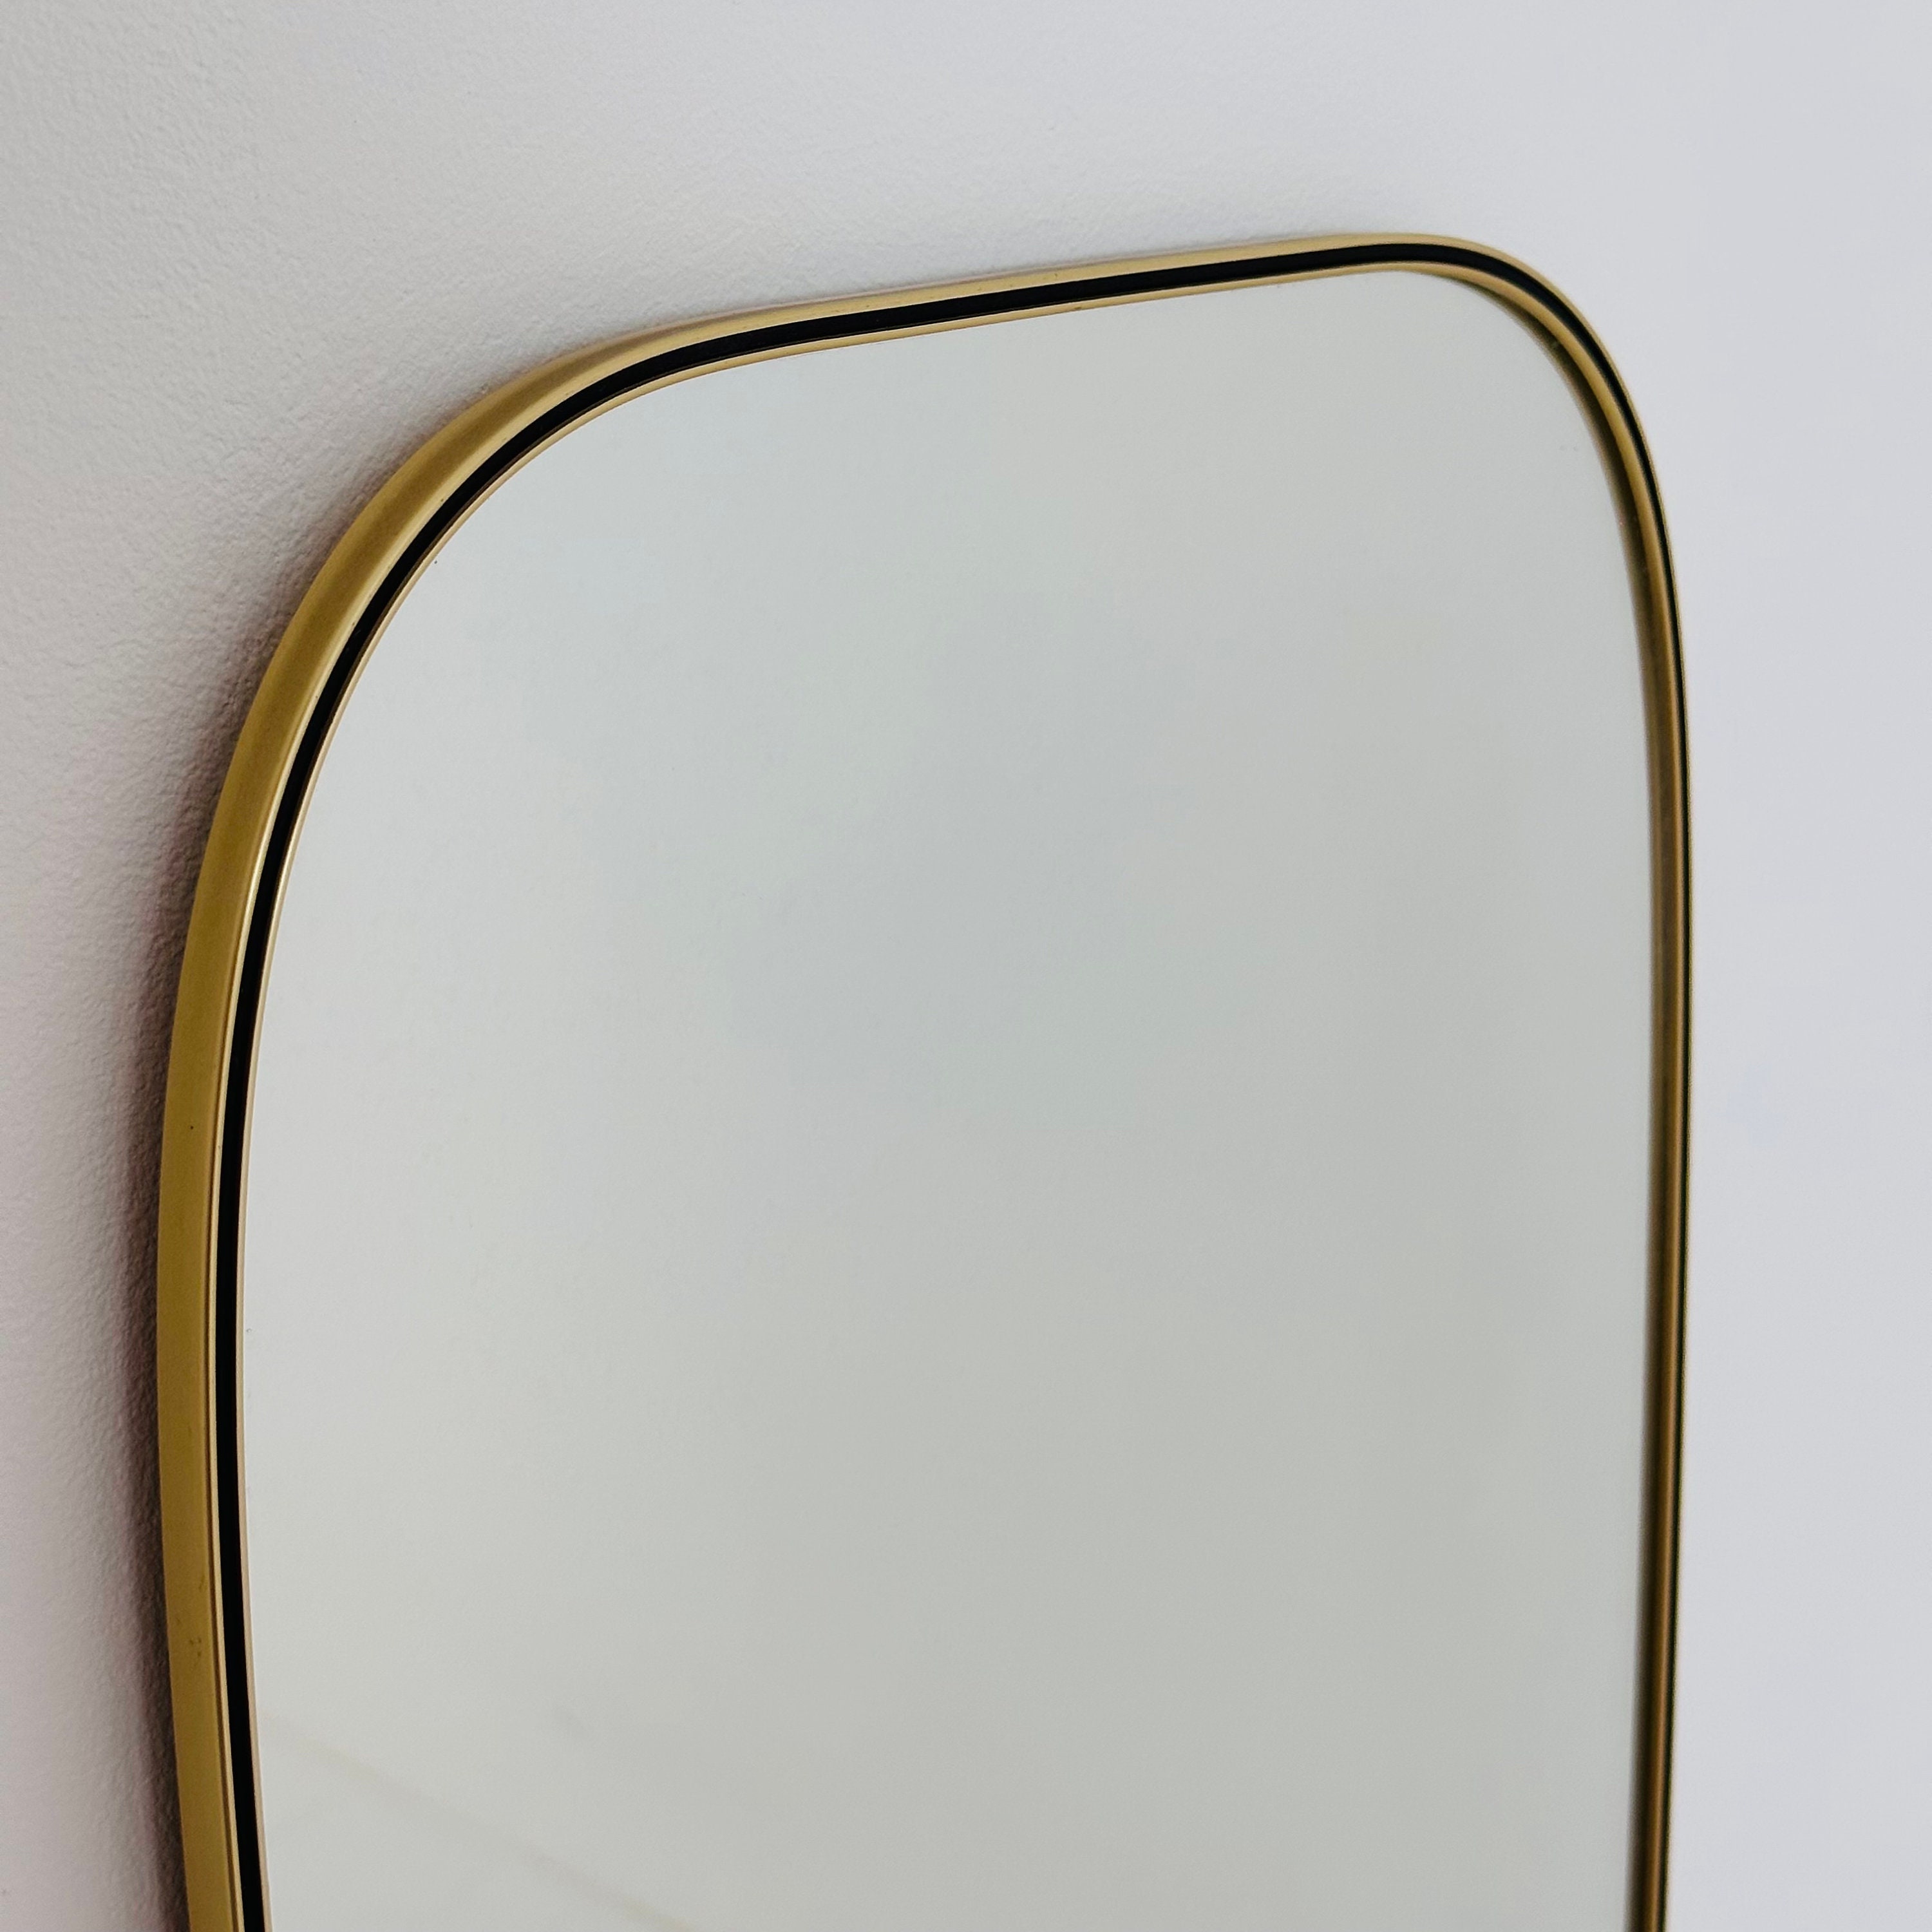 Mid Century Asymmetric German Brass Original Kidney Wall Mirror From the  60s Model Number 986 